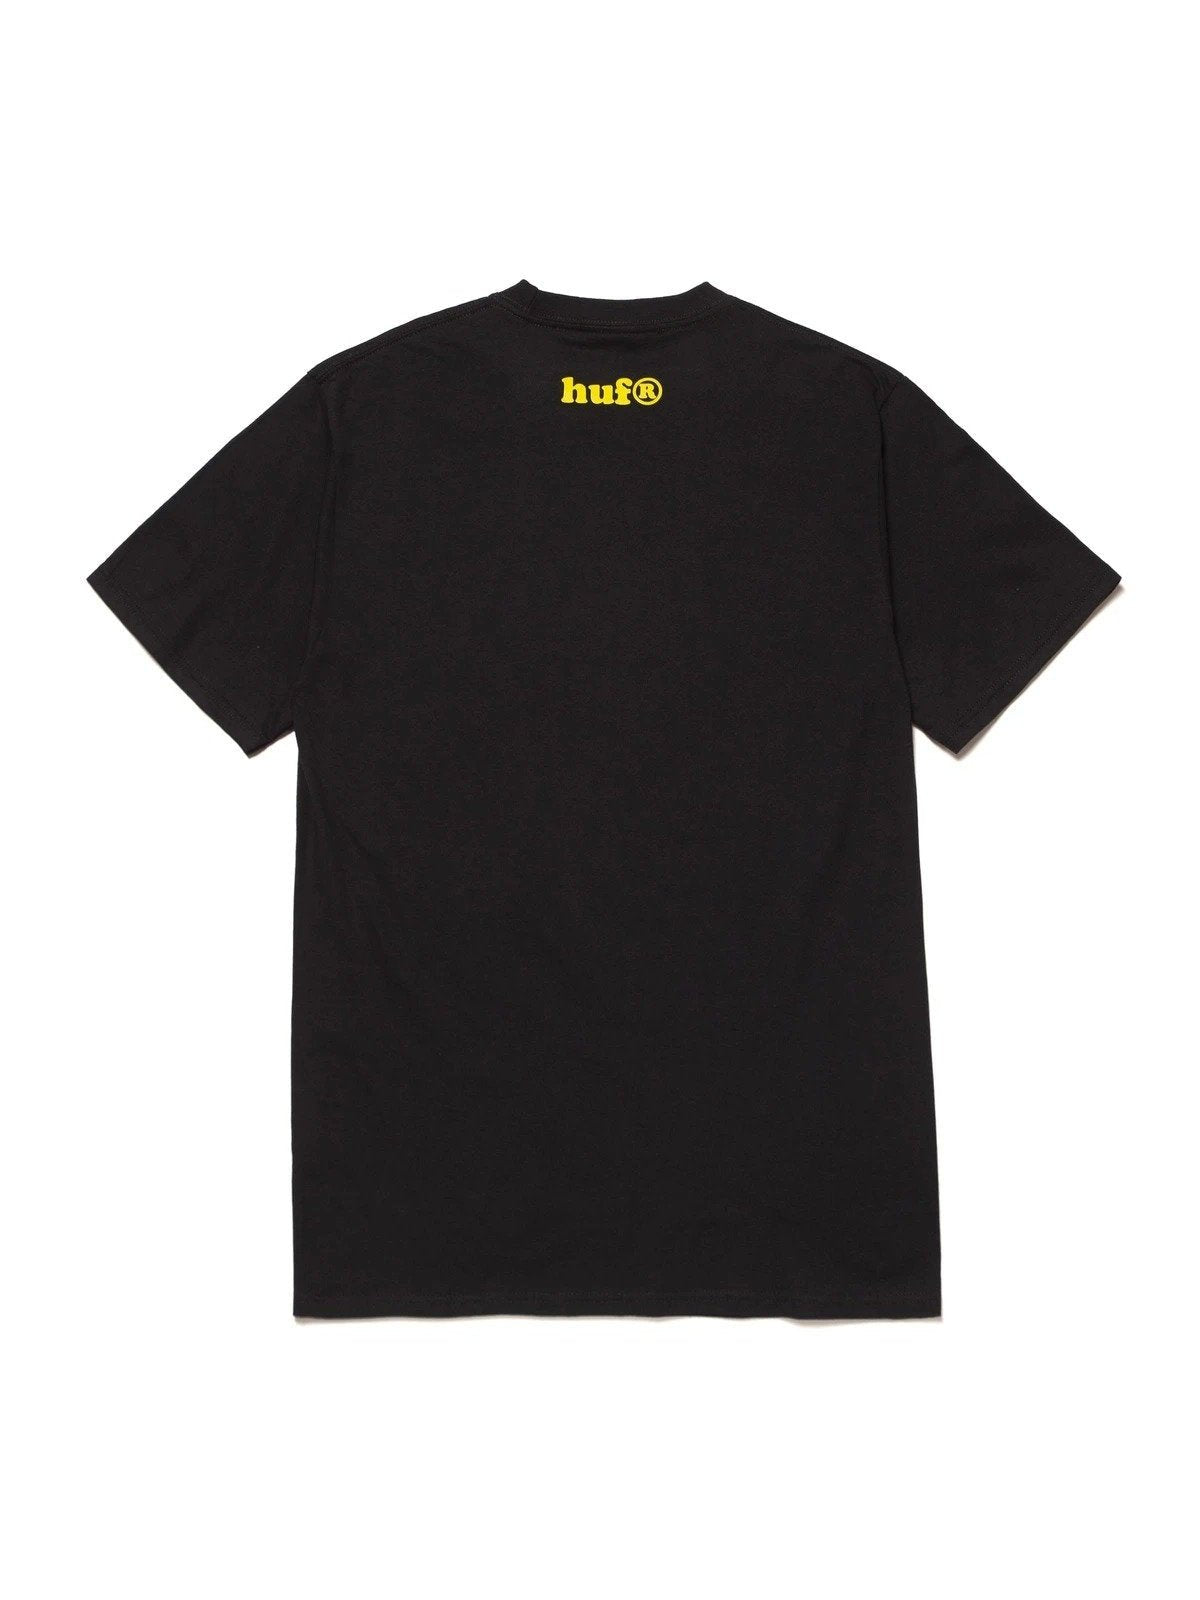 Huf Nug Man T Shirt Black TS01421.